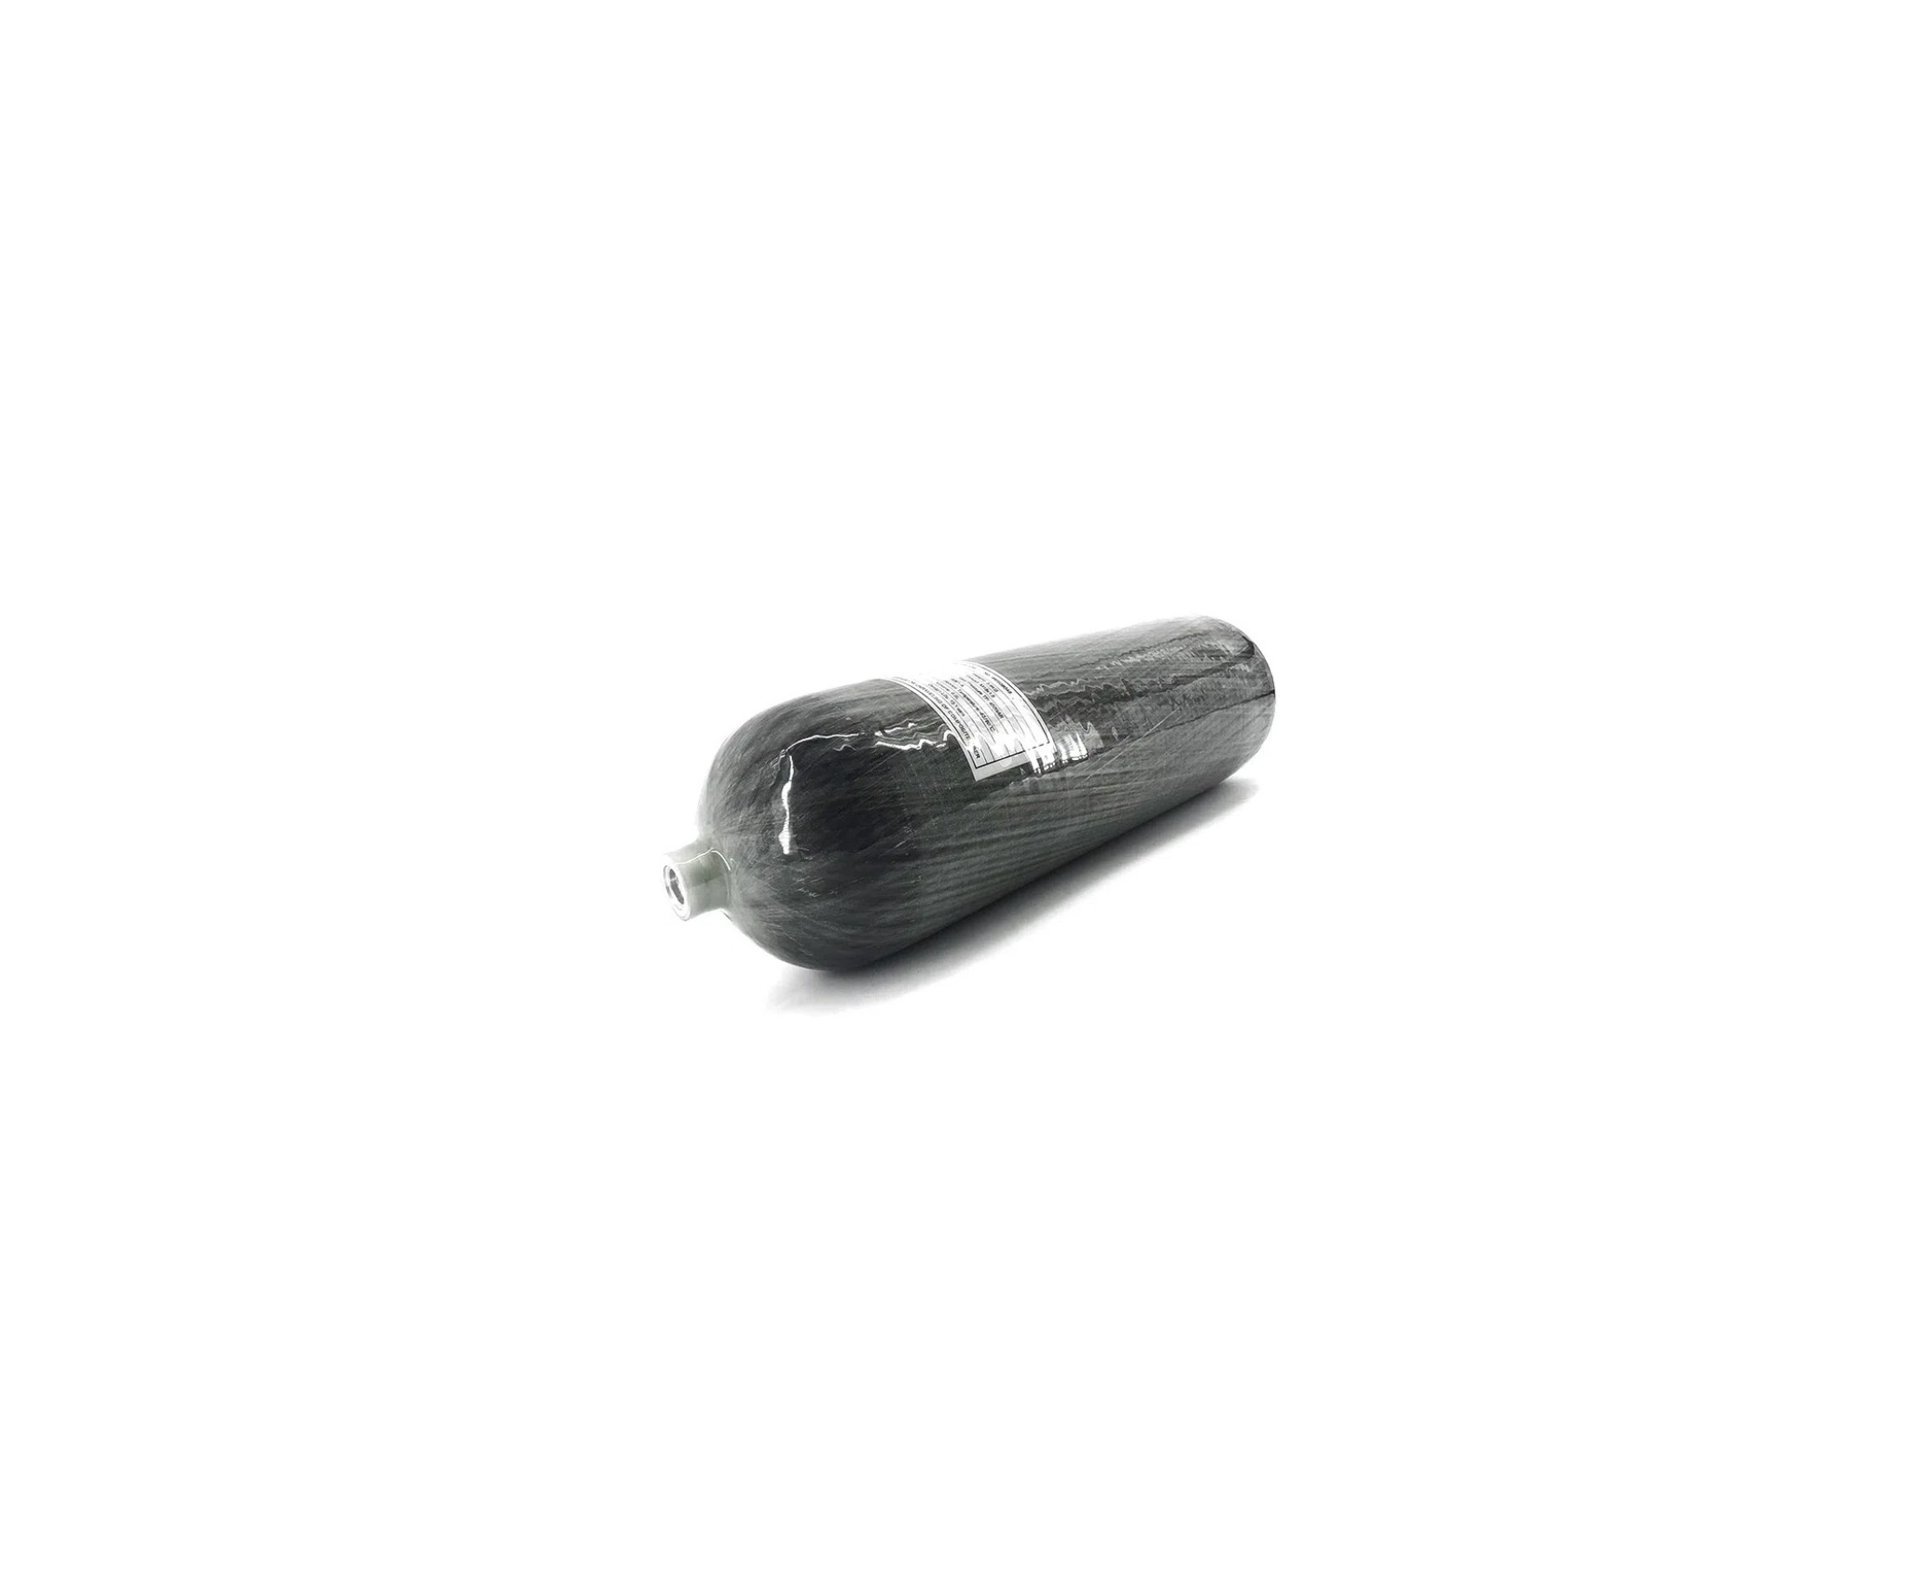 Cilindro Scuba de Aluminio PCP 300 bar 6,8L com Valvula - Leão